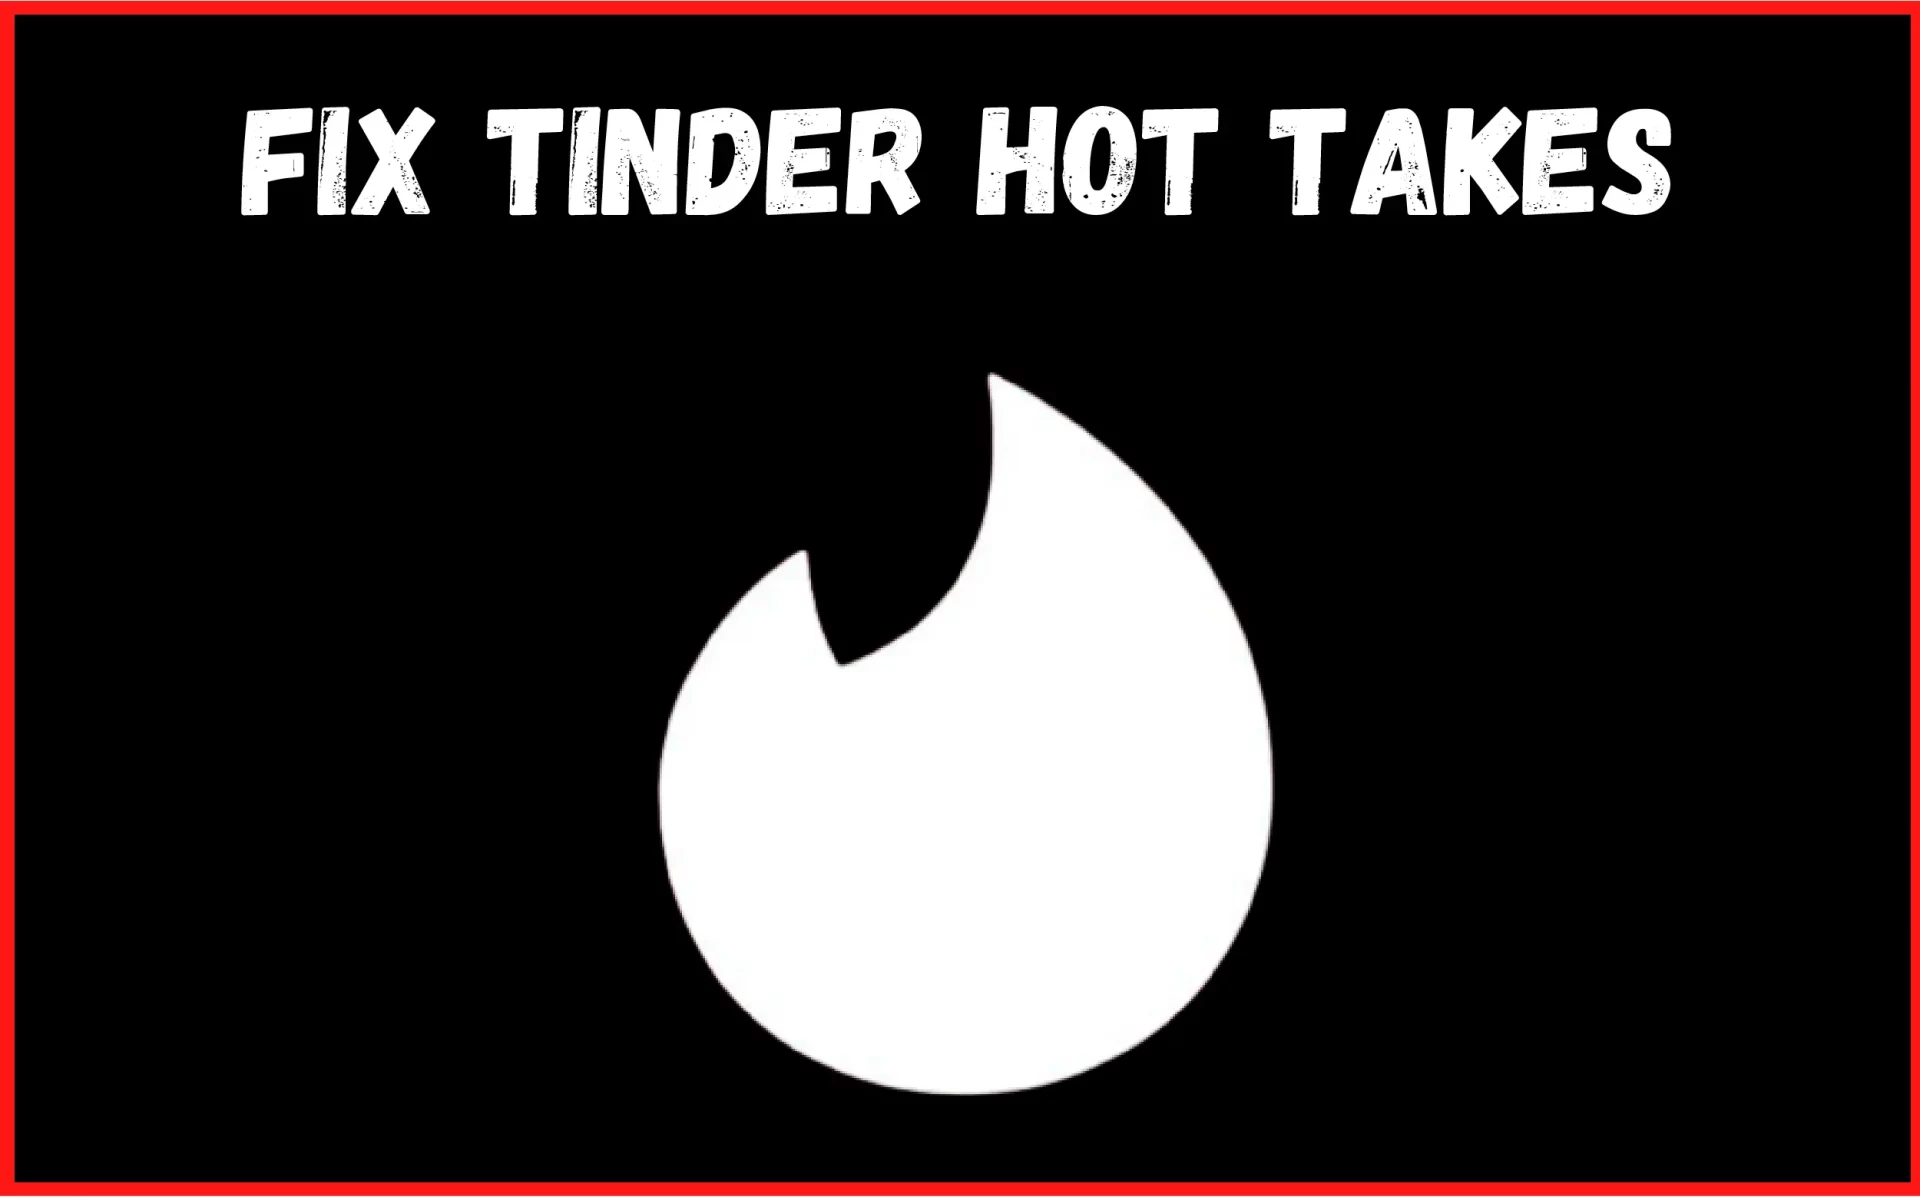 Tinder Hot Takes Not Working?